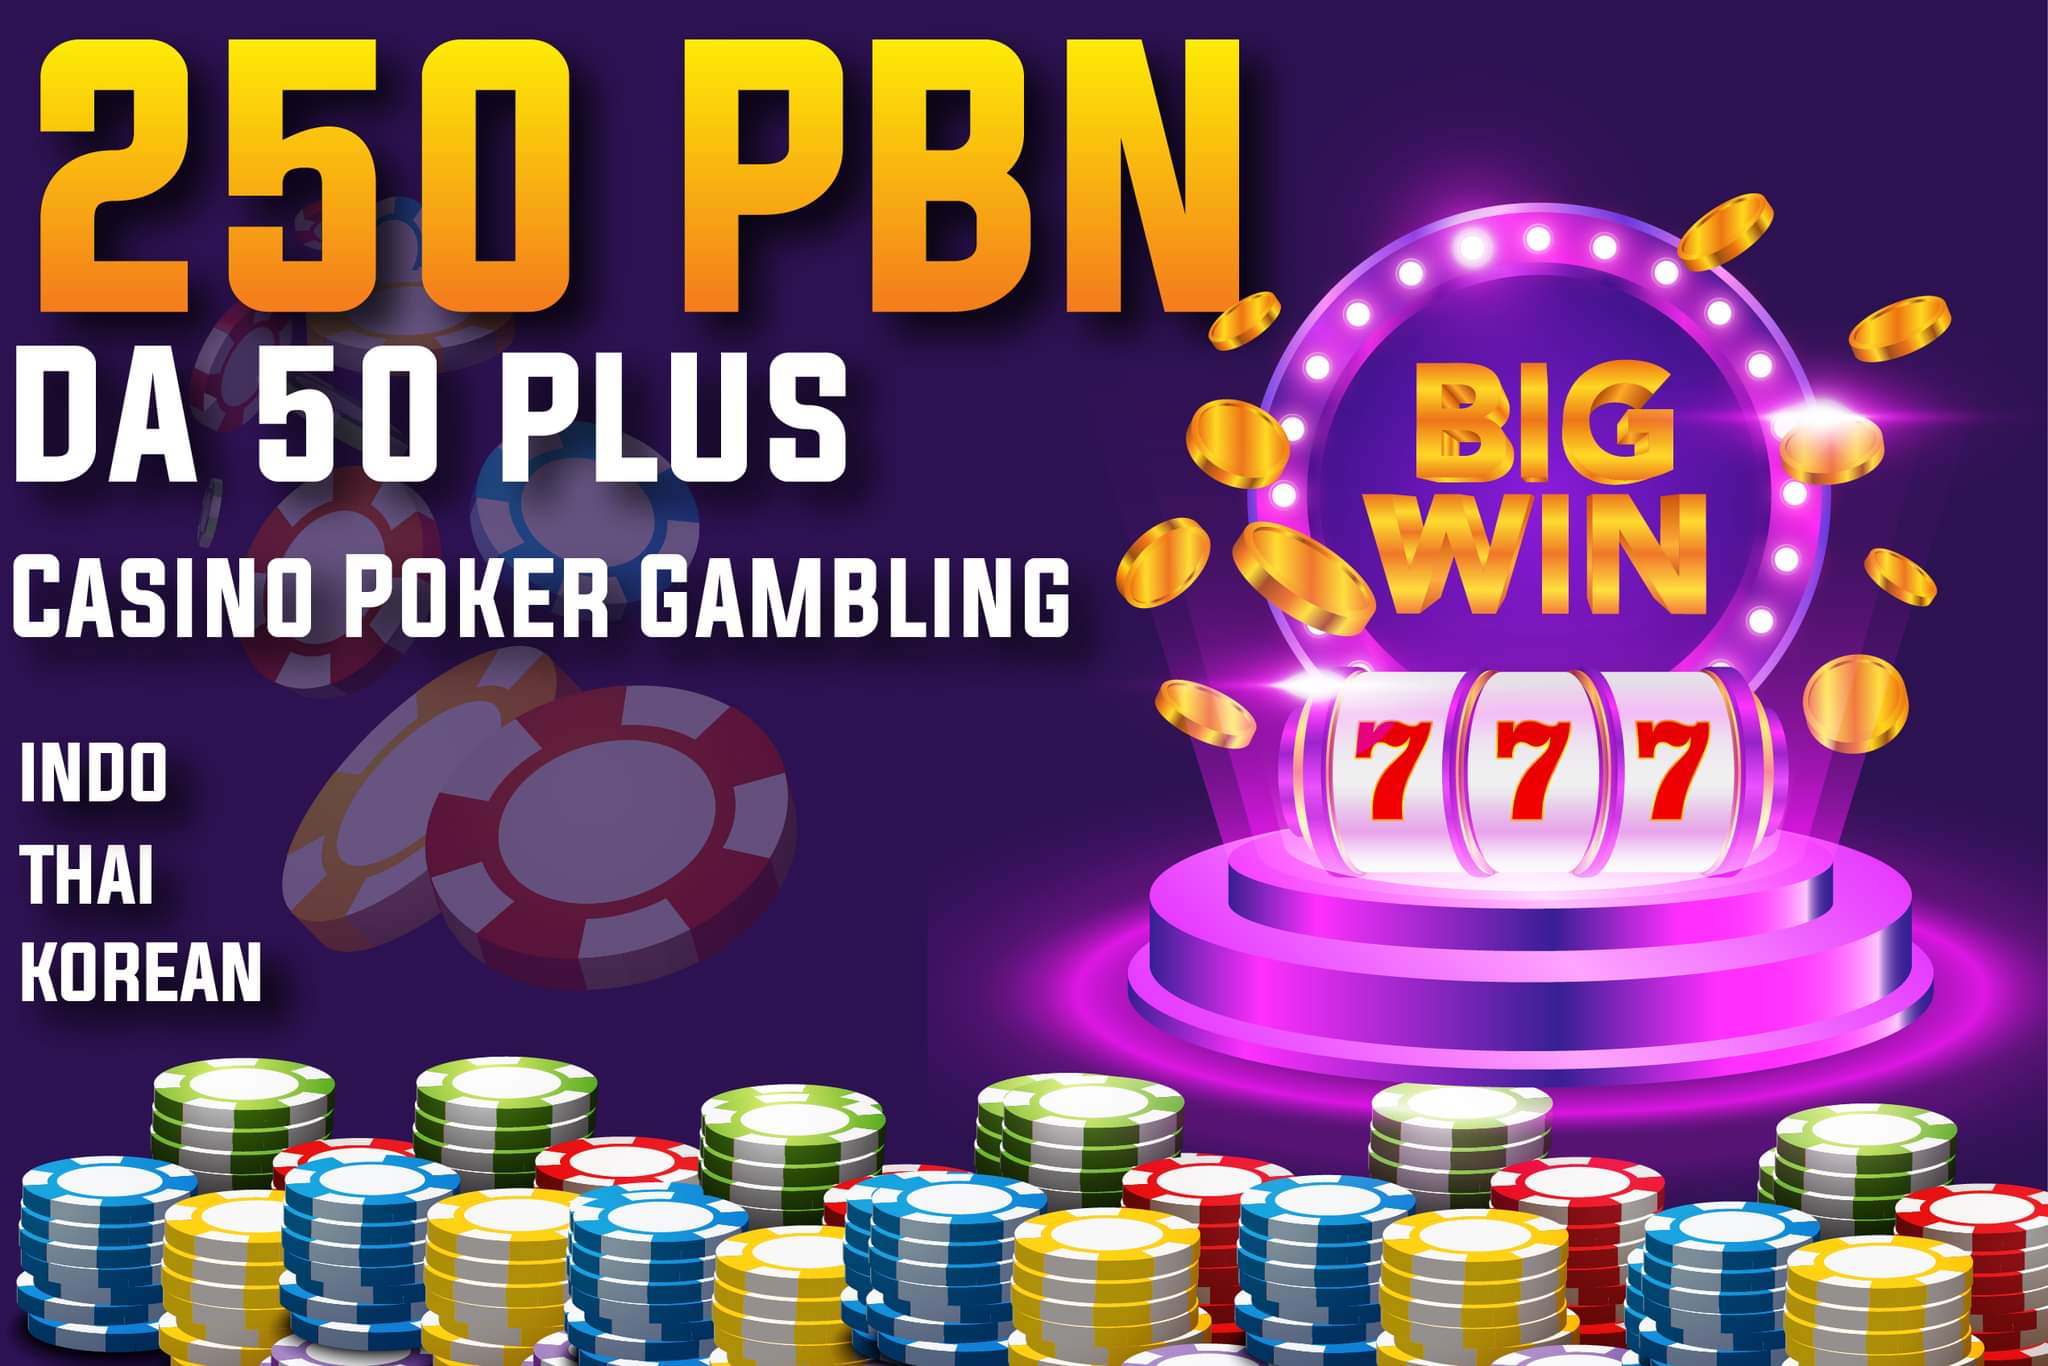 250 High Quality PBN DA50+ Backlinks - Casino Poker Gambling, Korean Indo Thai content